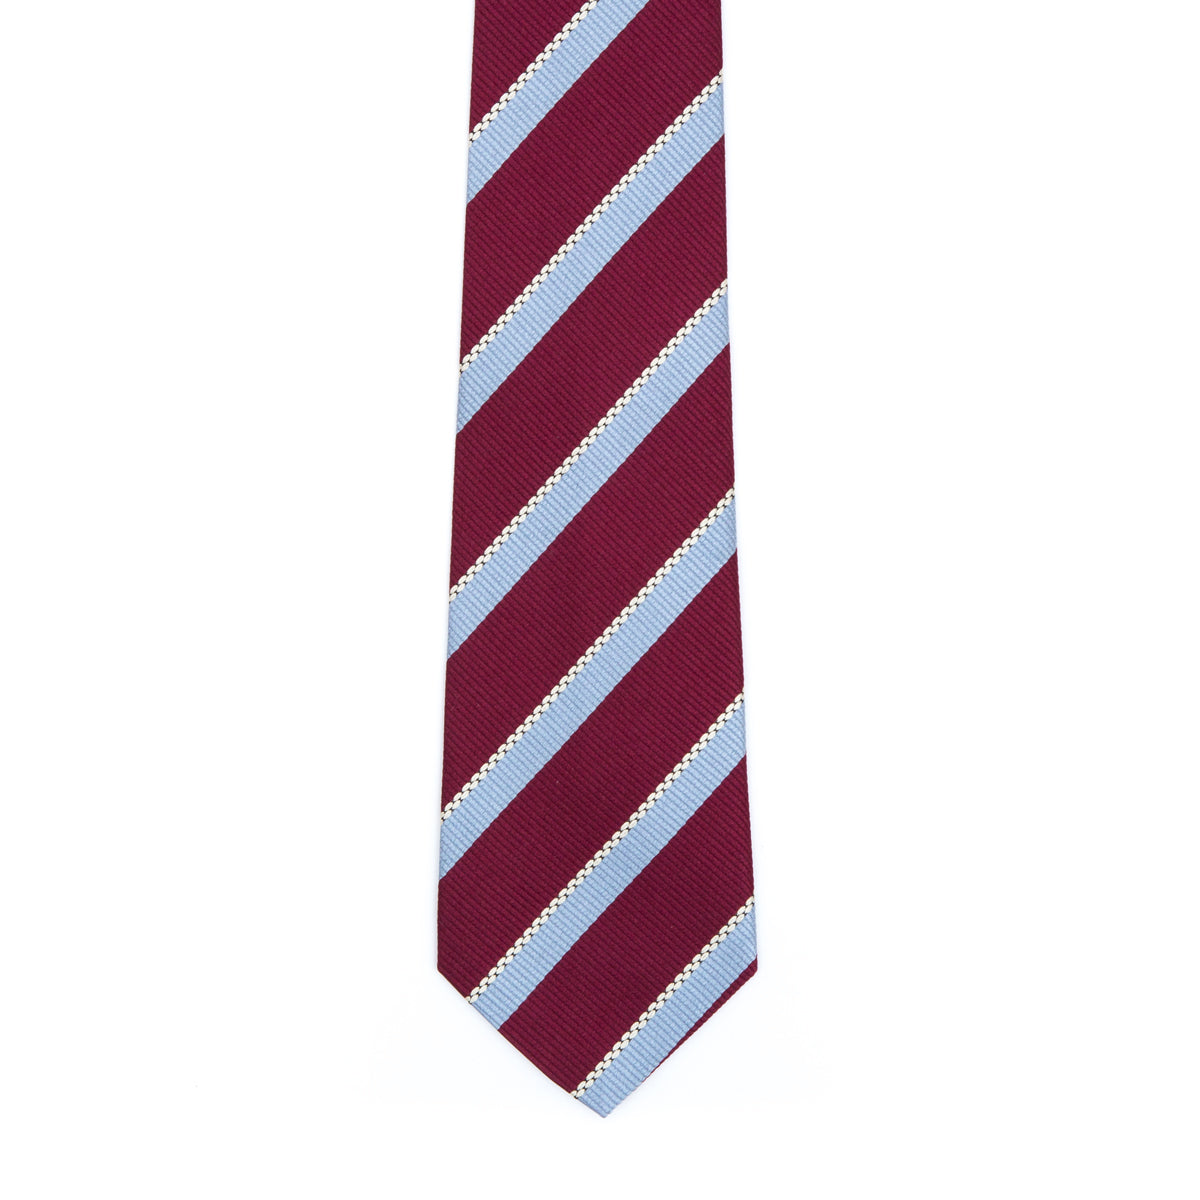 Light blue striped tie